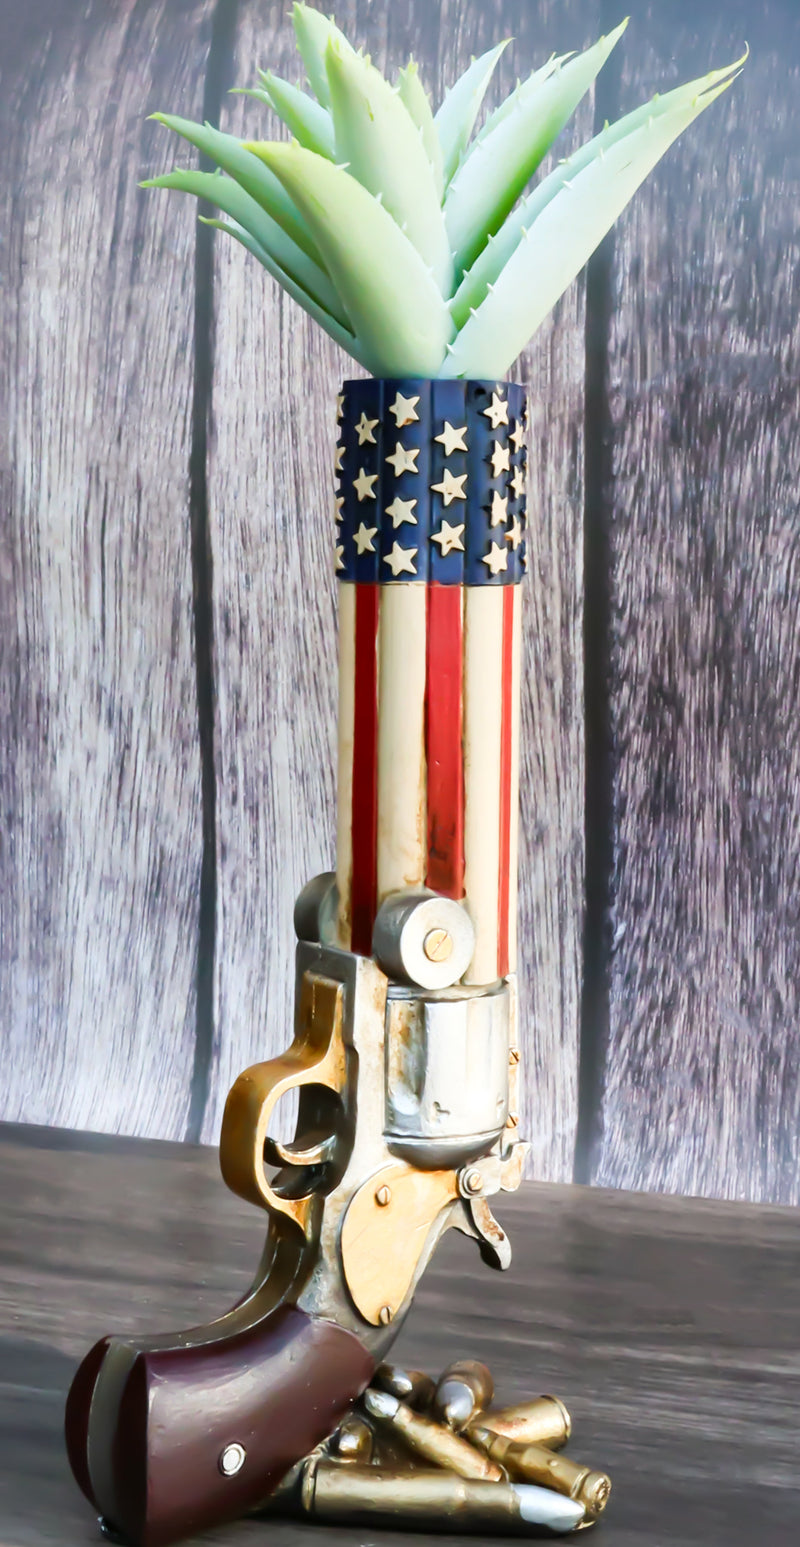 Western American Flag Cowboy Pistol Gun With Bullet Shells Floral Vase Decor